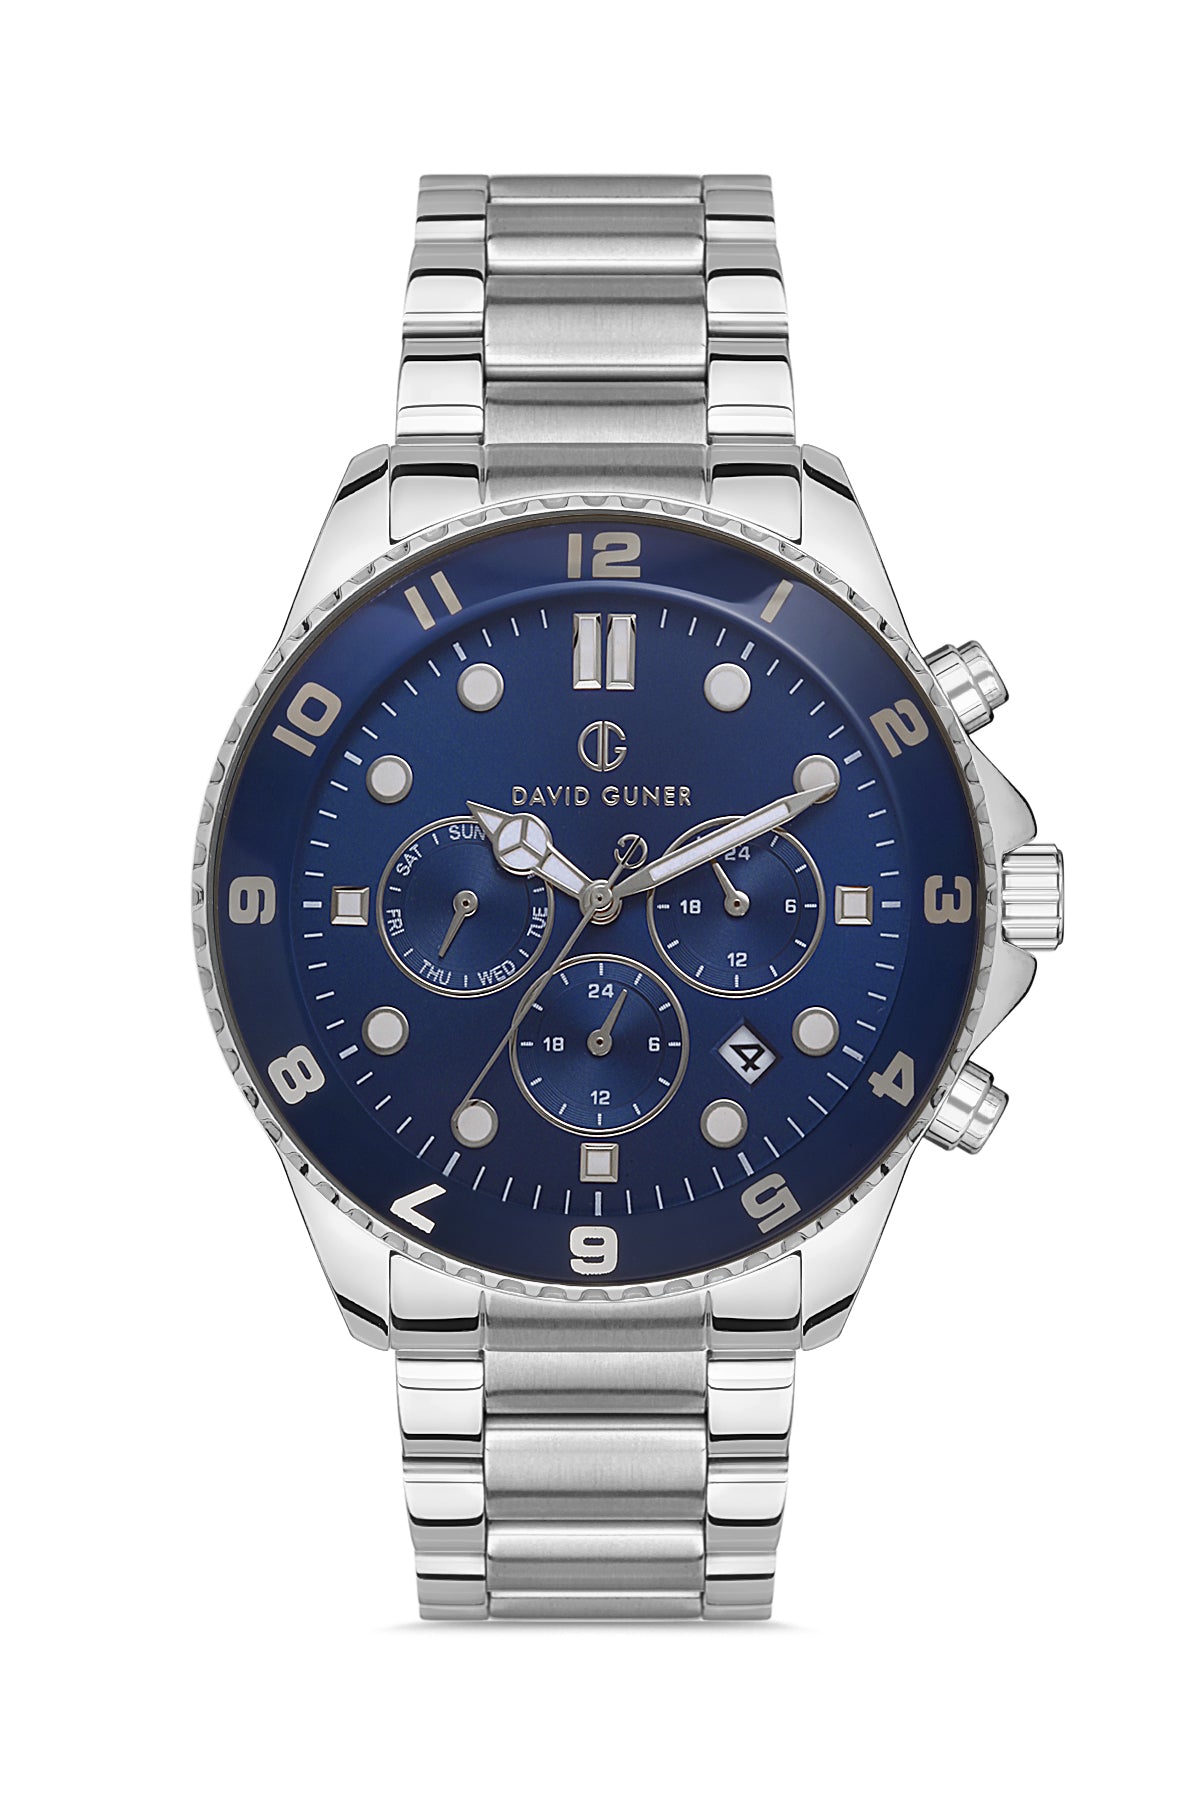 DAVID GUNER Blue Dial Men's Wristwatch